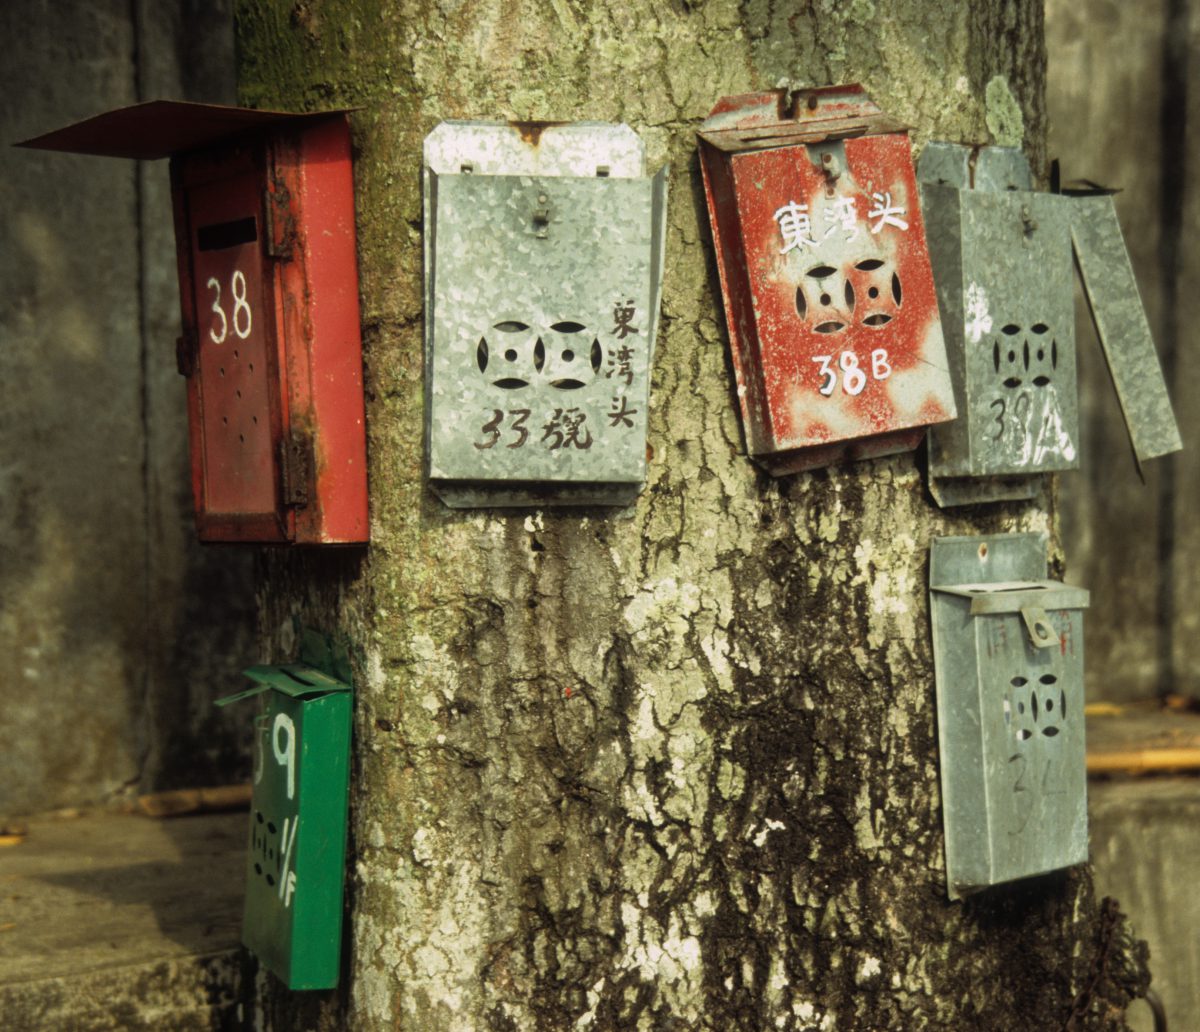 Mailboxes, tree, box